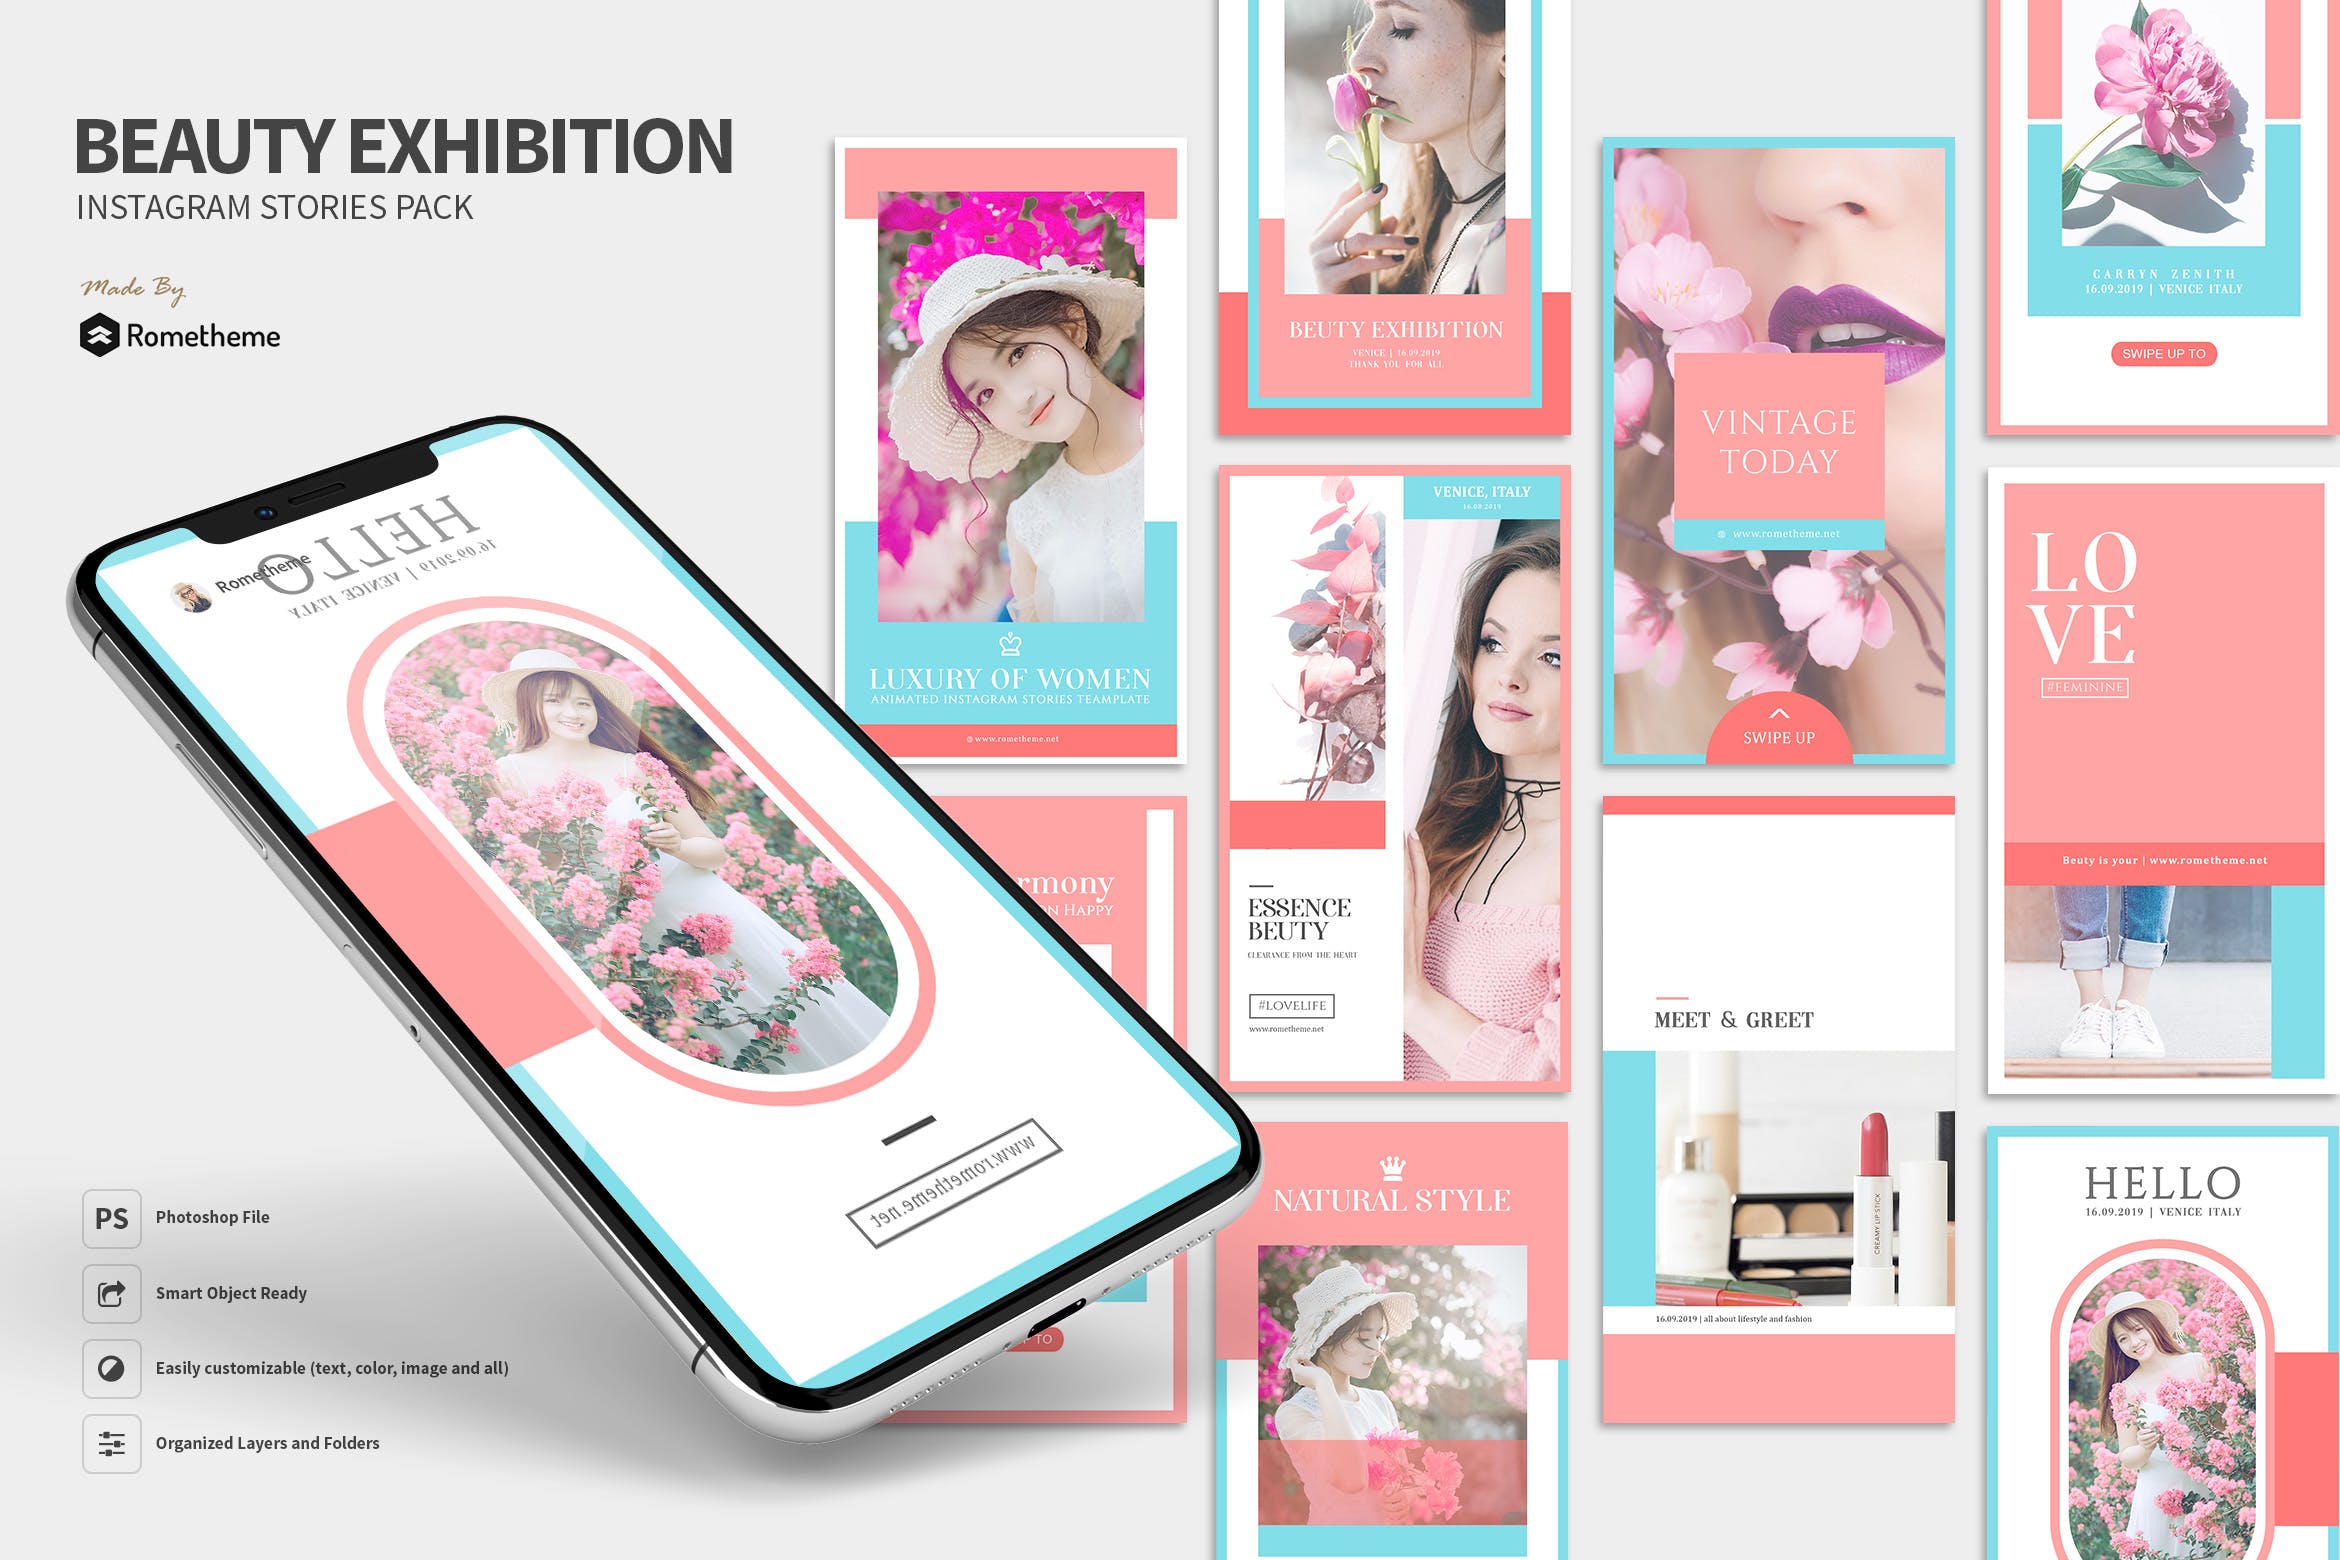 美妆品牌Instagram社交推广品牌故事设计素材包 Beauty Exhibition – Instagram Stories Pack插图